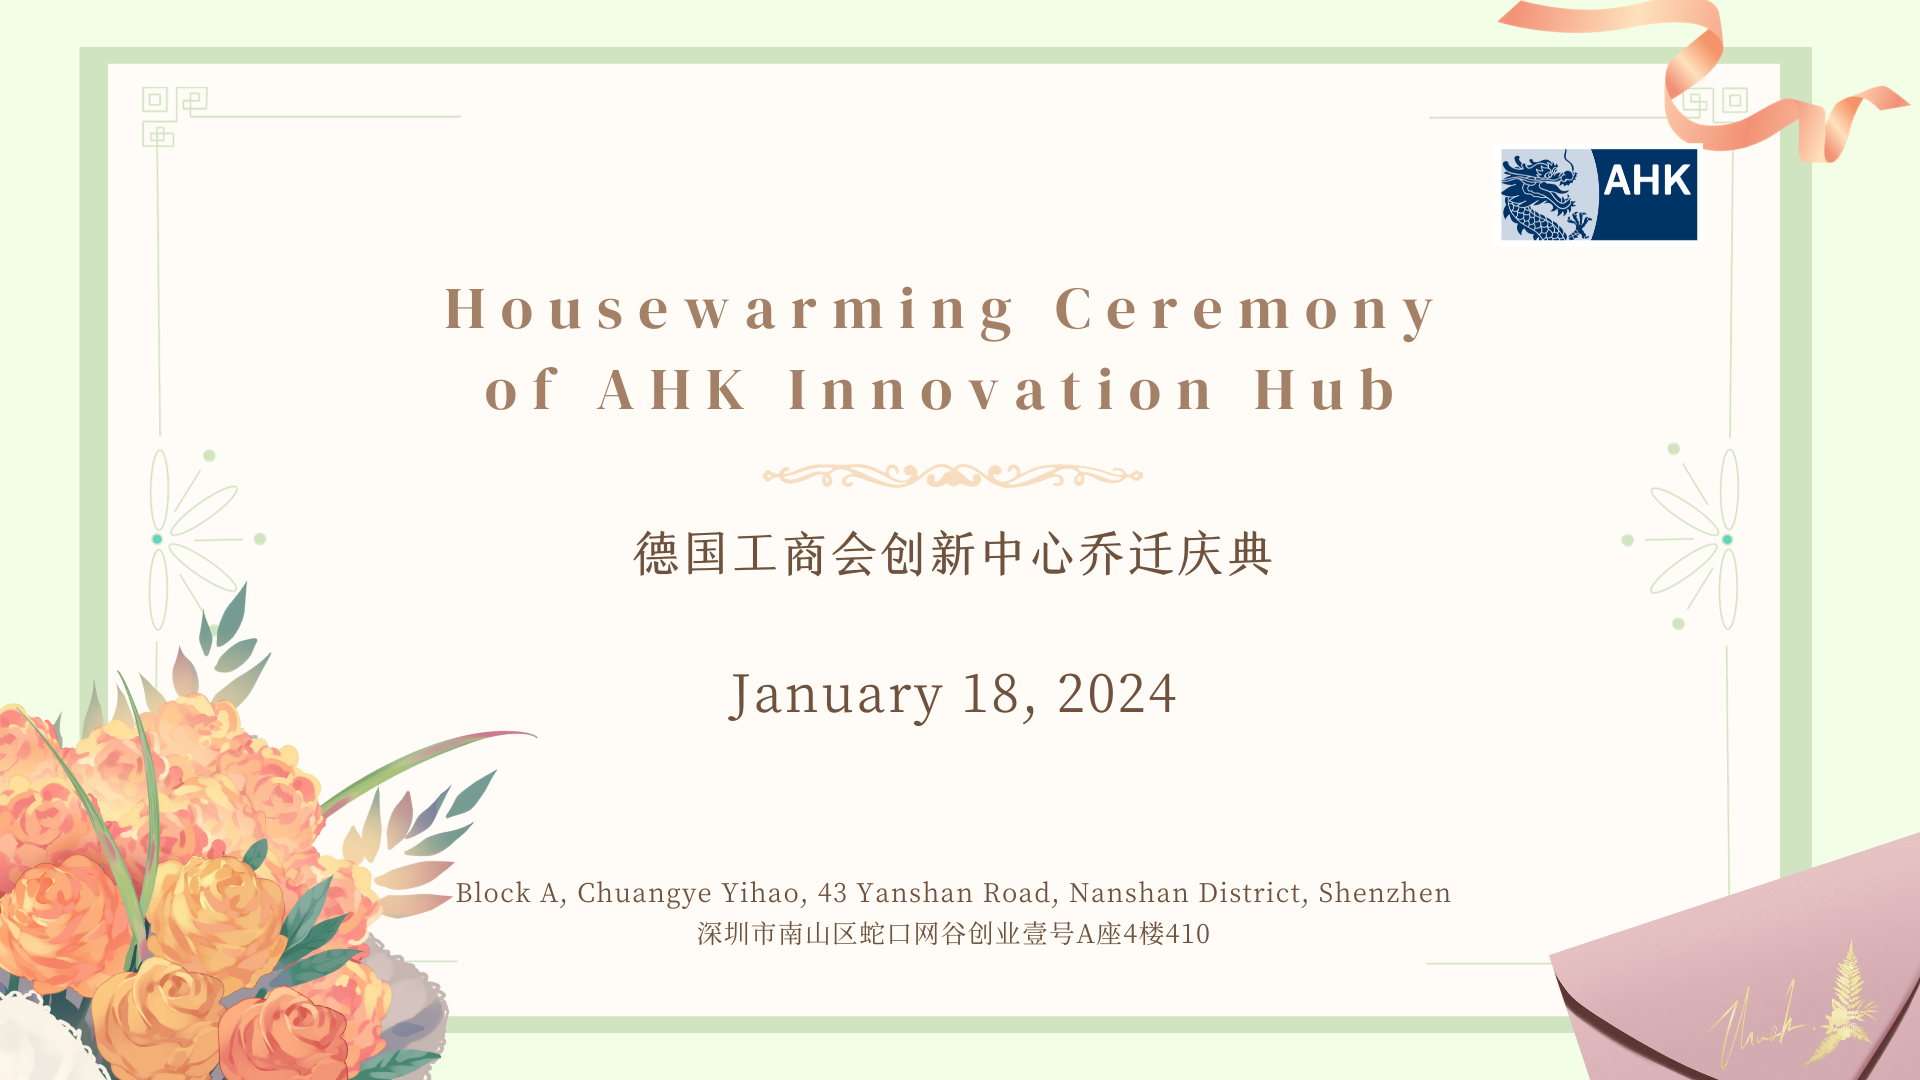 [Jan 18 | SZ] Housewarming Ceremony of AHK Innovation Hub 德国工商大会创新中心乔迁庆典